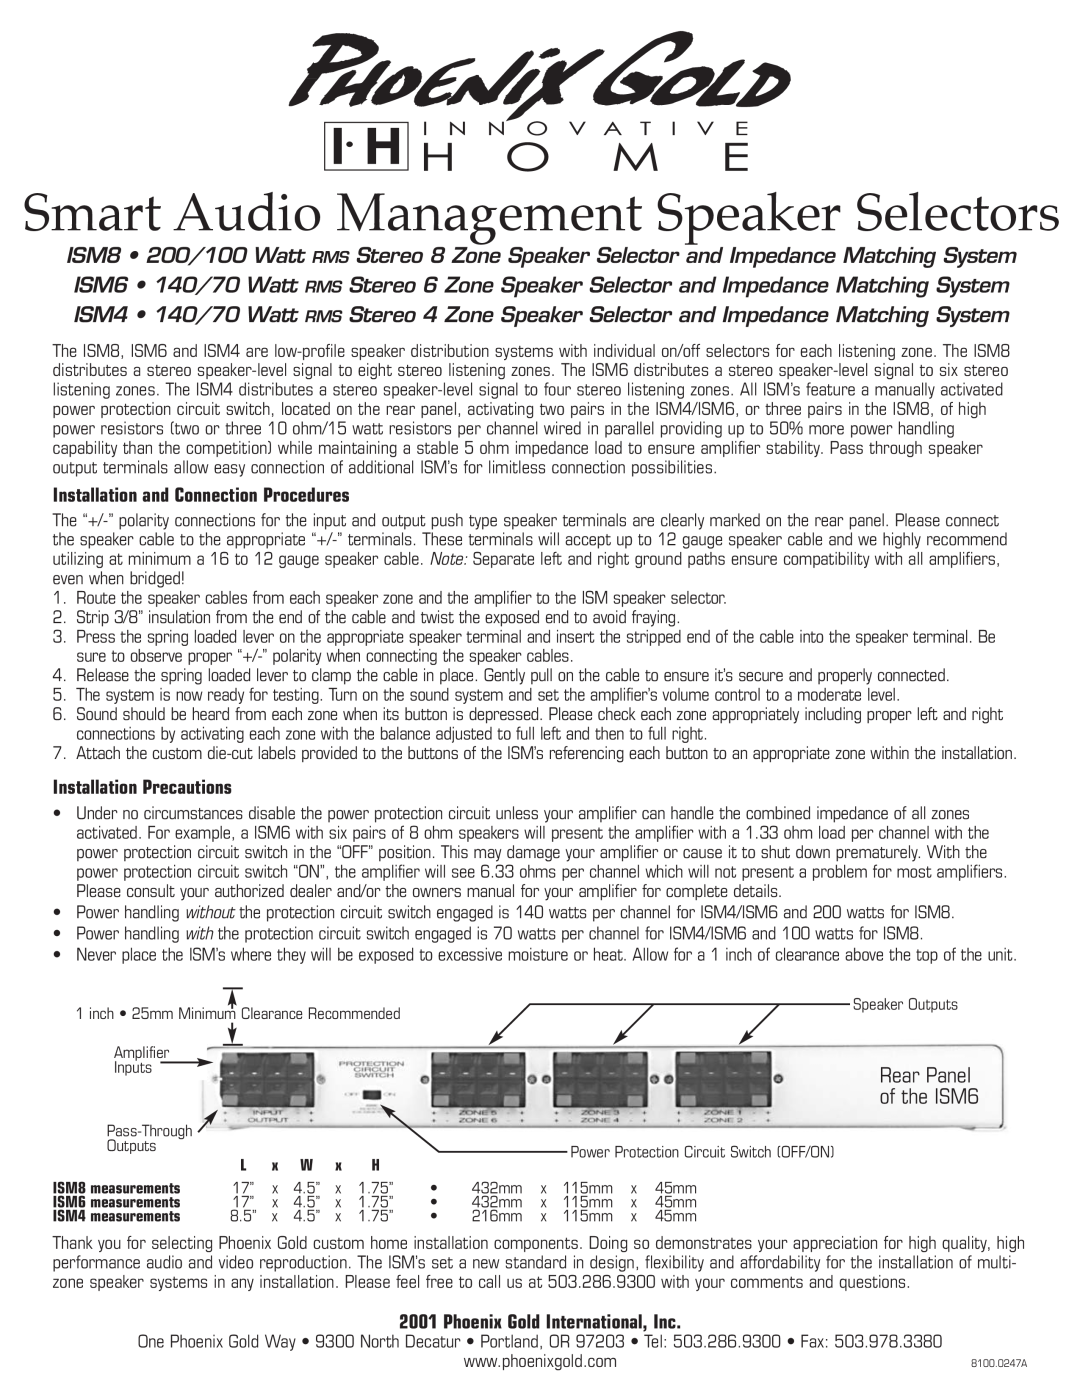 Phoenix Gold owner manual Smart Audio Management Speaker Selectors, Rear Panel of the ISM6, Installation Precautions 